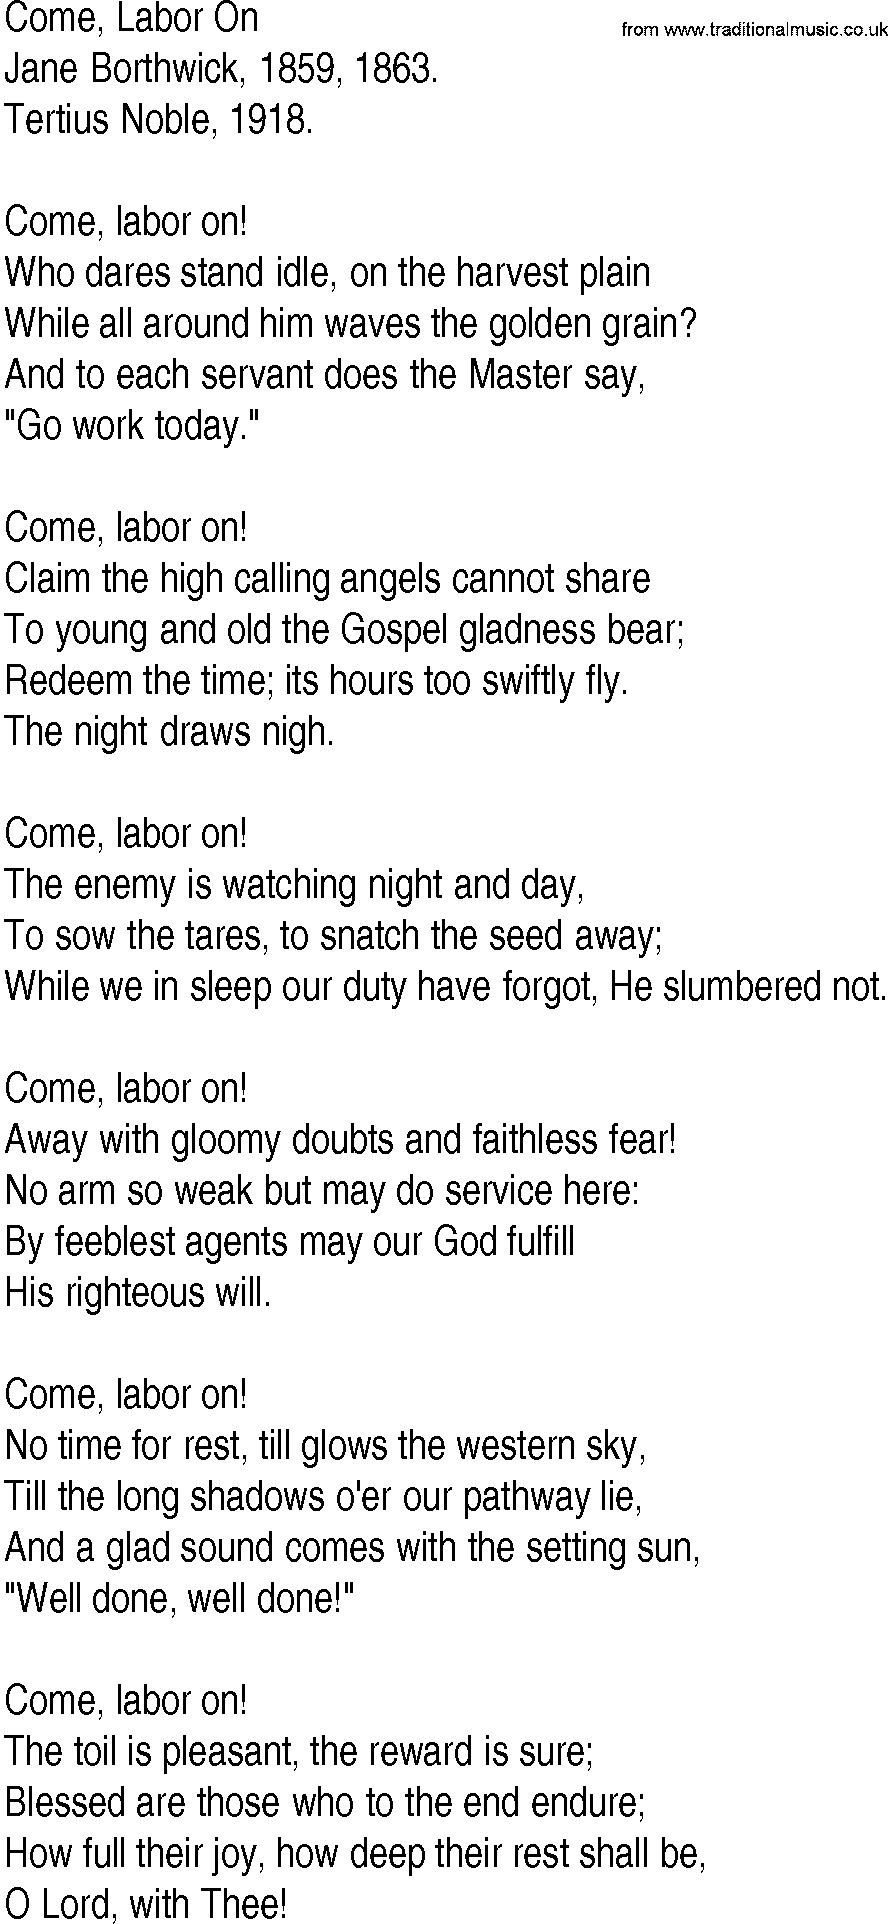 Hymn and Gospel Song: Come, Labor On by Jane Borthwick lyrics